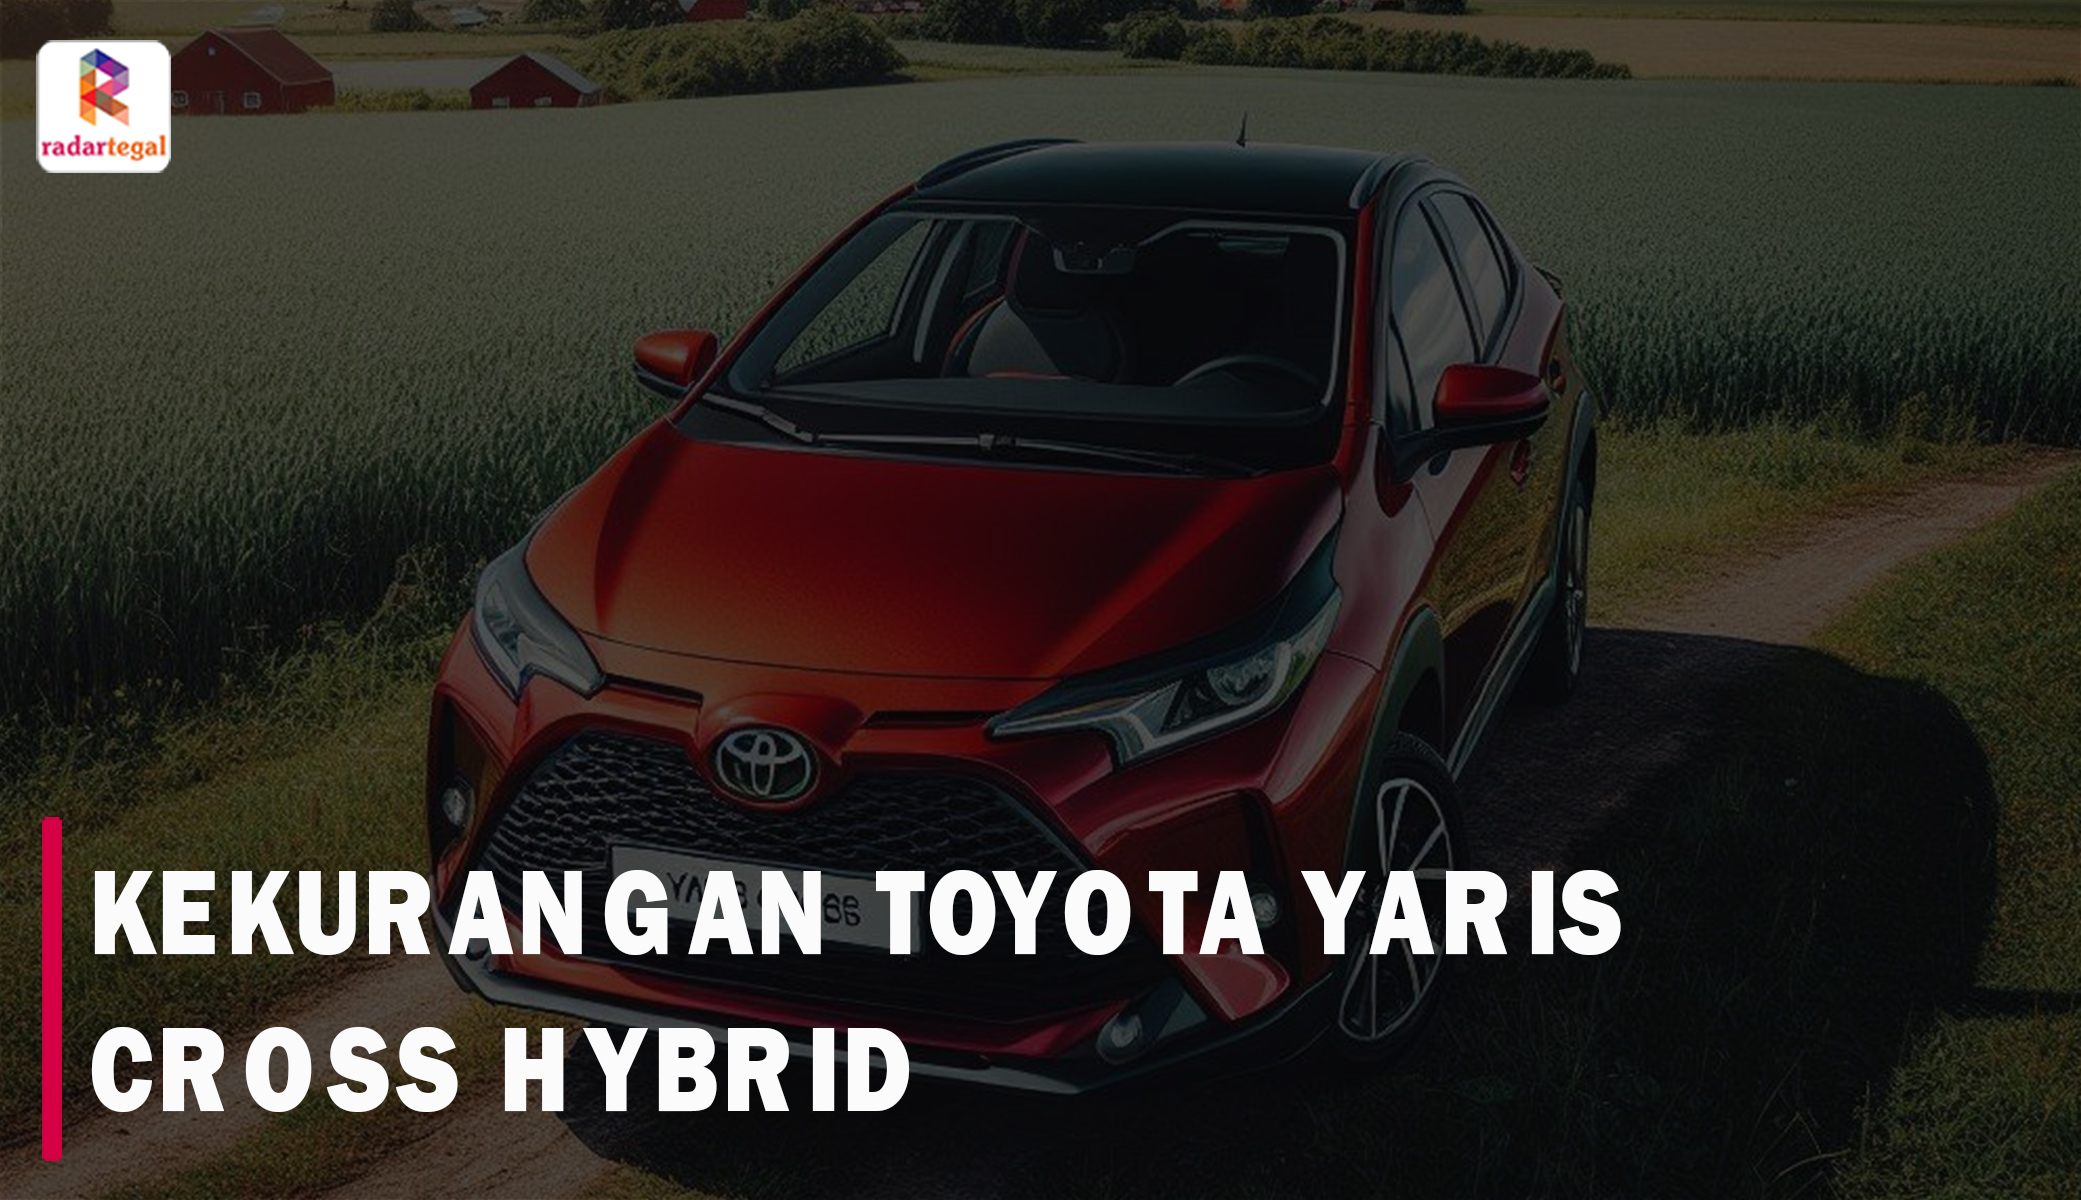 7 Kekurangan Toyota Yaris Cross Hybrid yang Sering Dikeluhkan Penggunanya di Forum Otomotif